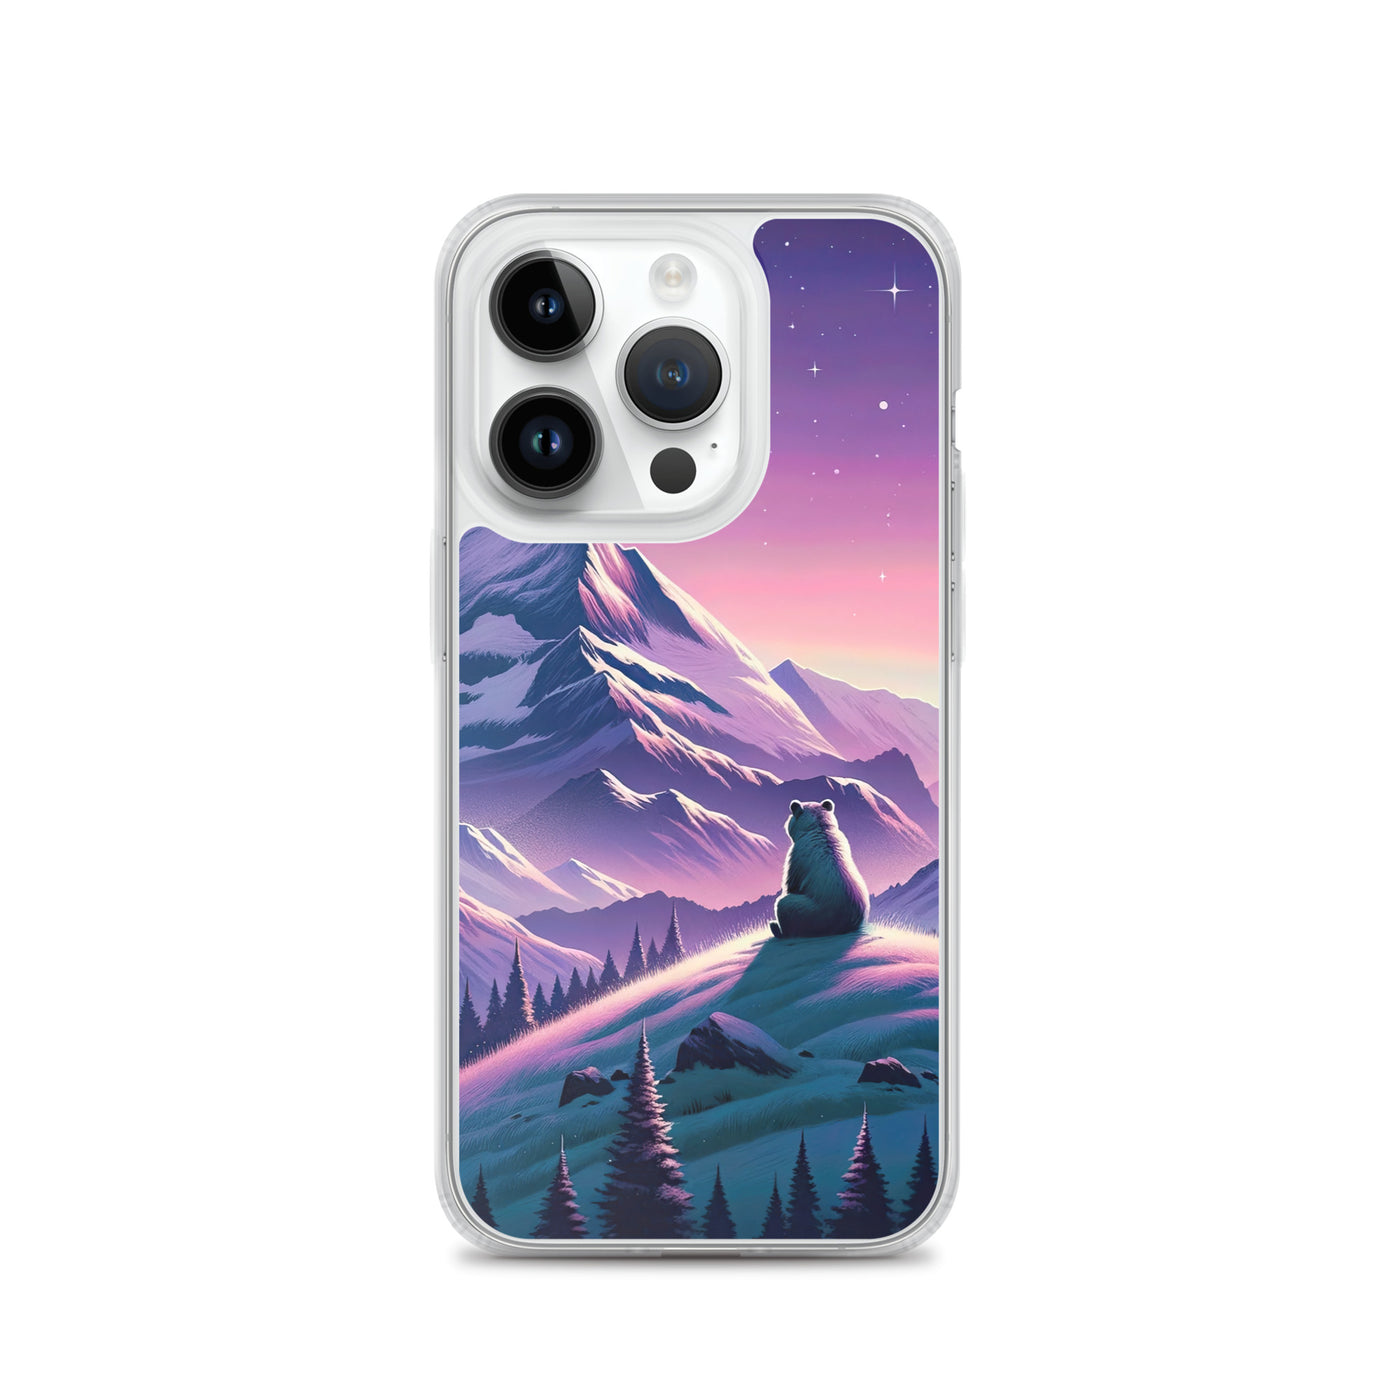 Bezaubernder Alpenabend mit Bär, lavendel-rosafarbener Himmel (AN) - iPhone Schutzhülle (durchsichtig) xxx yyy zzz iPhone 14 Pro